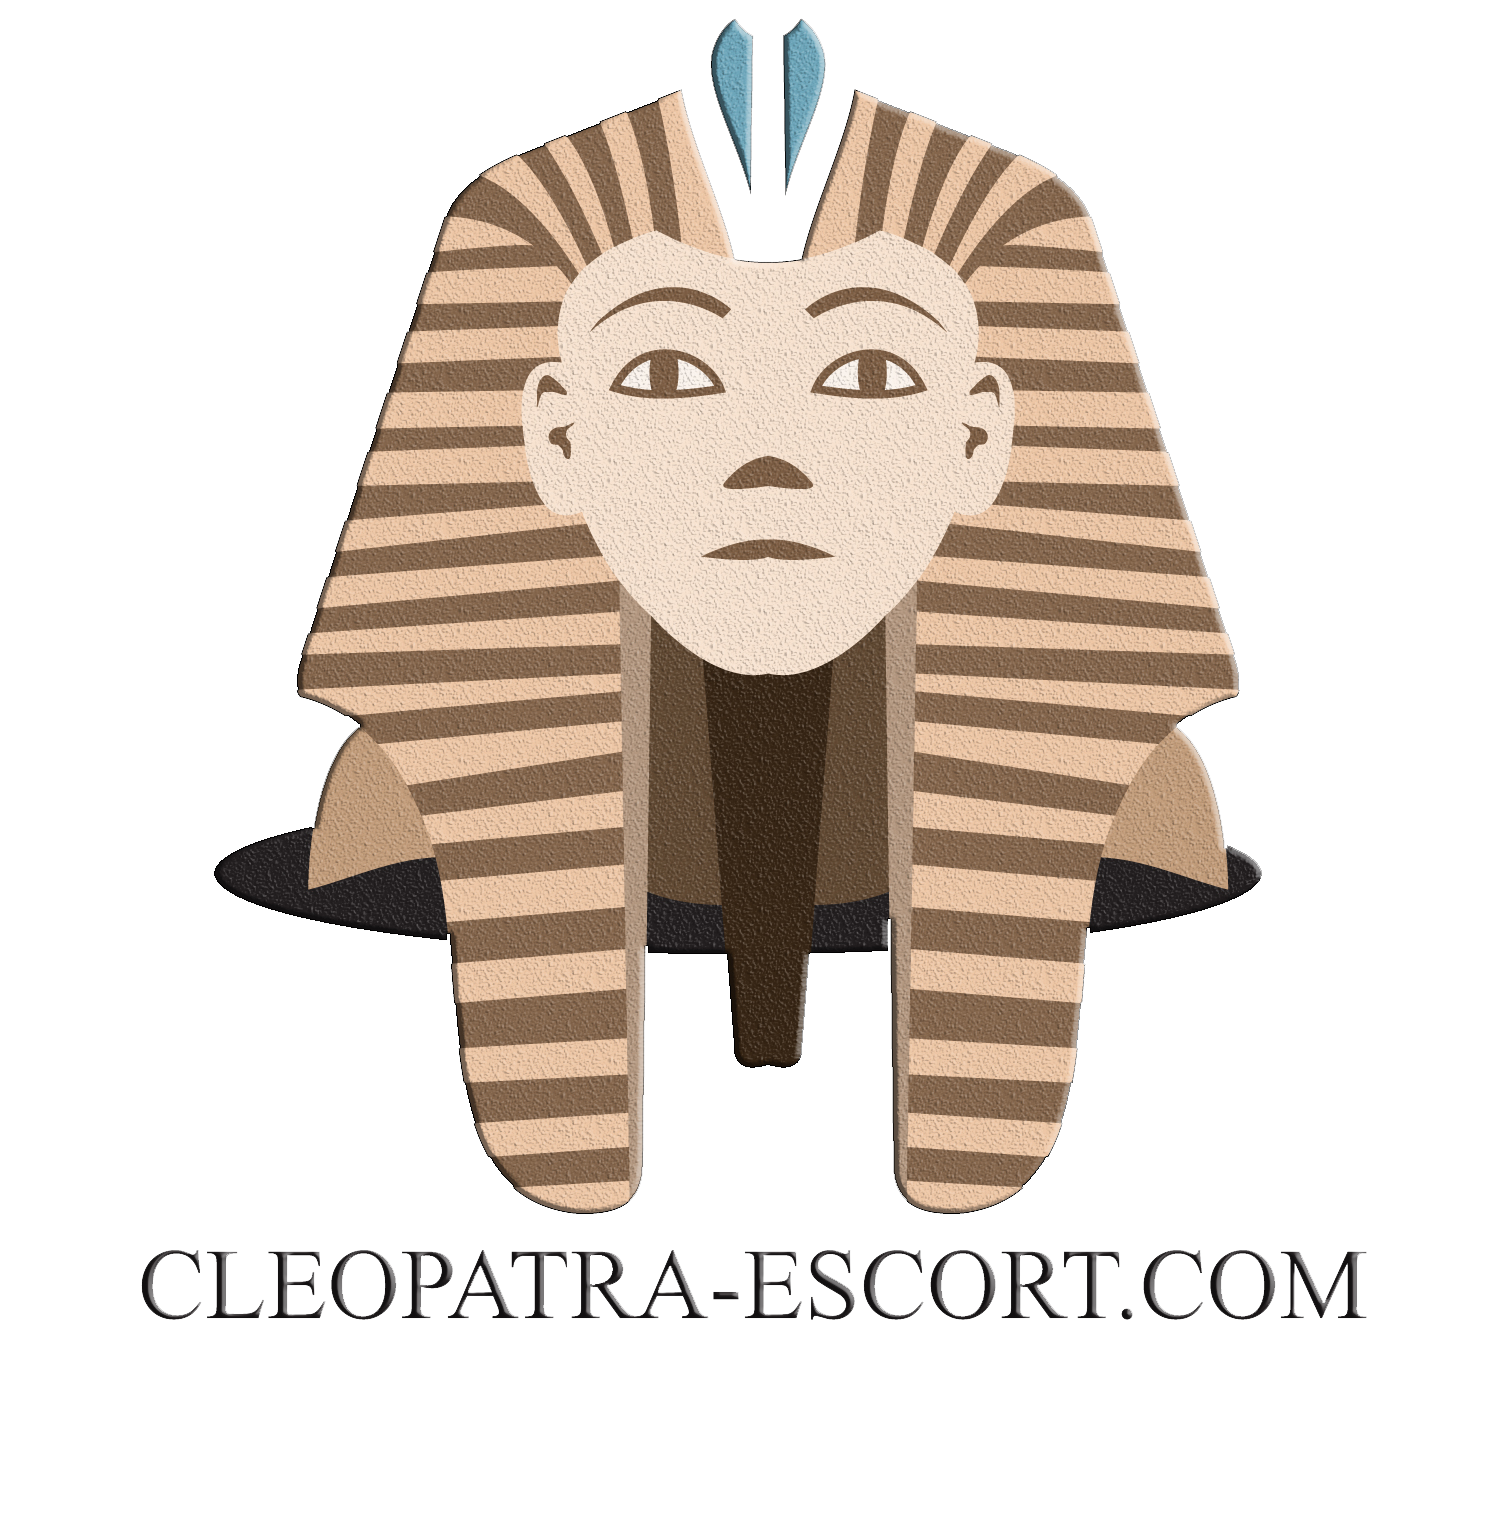 Cleopatra Escort logo